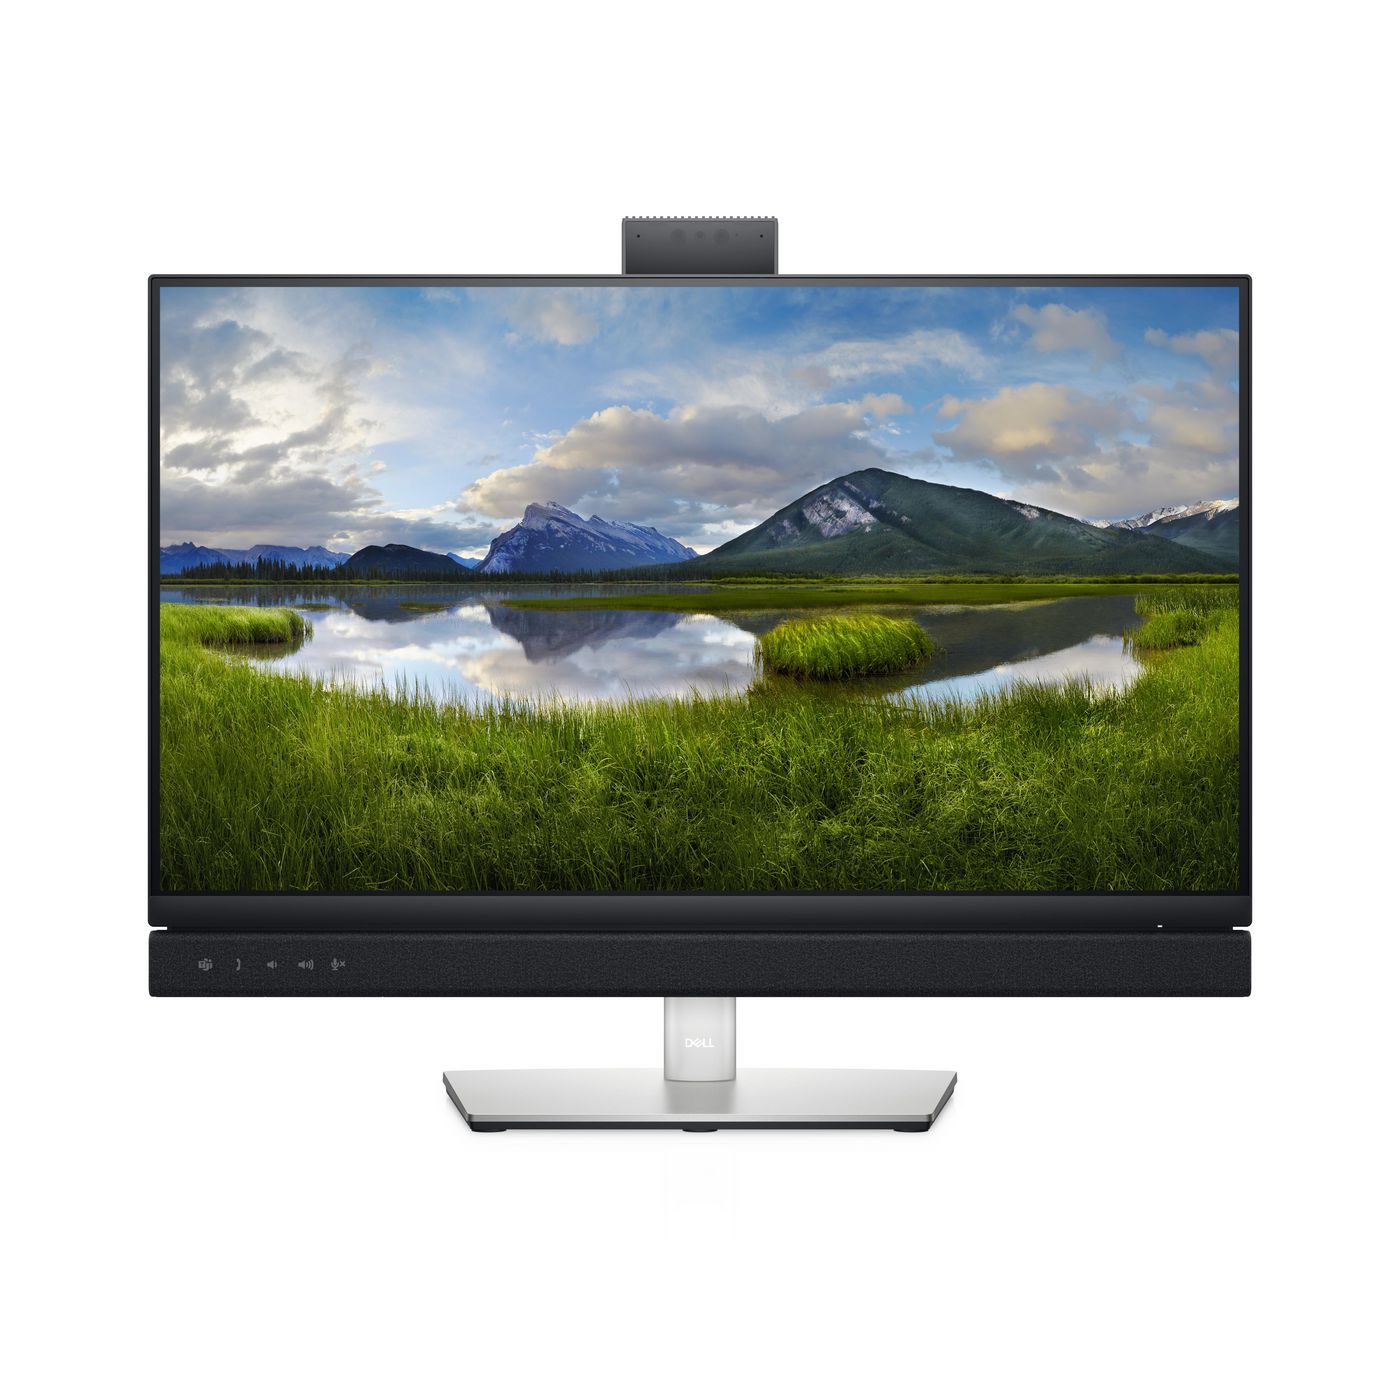 Monitor LCD - C2422he -24in - 1920x1080 - Full Hd - Black